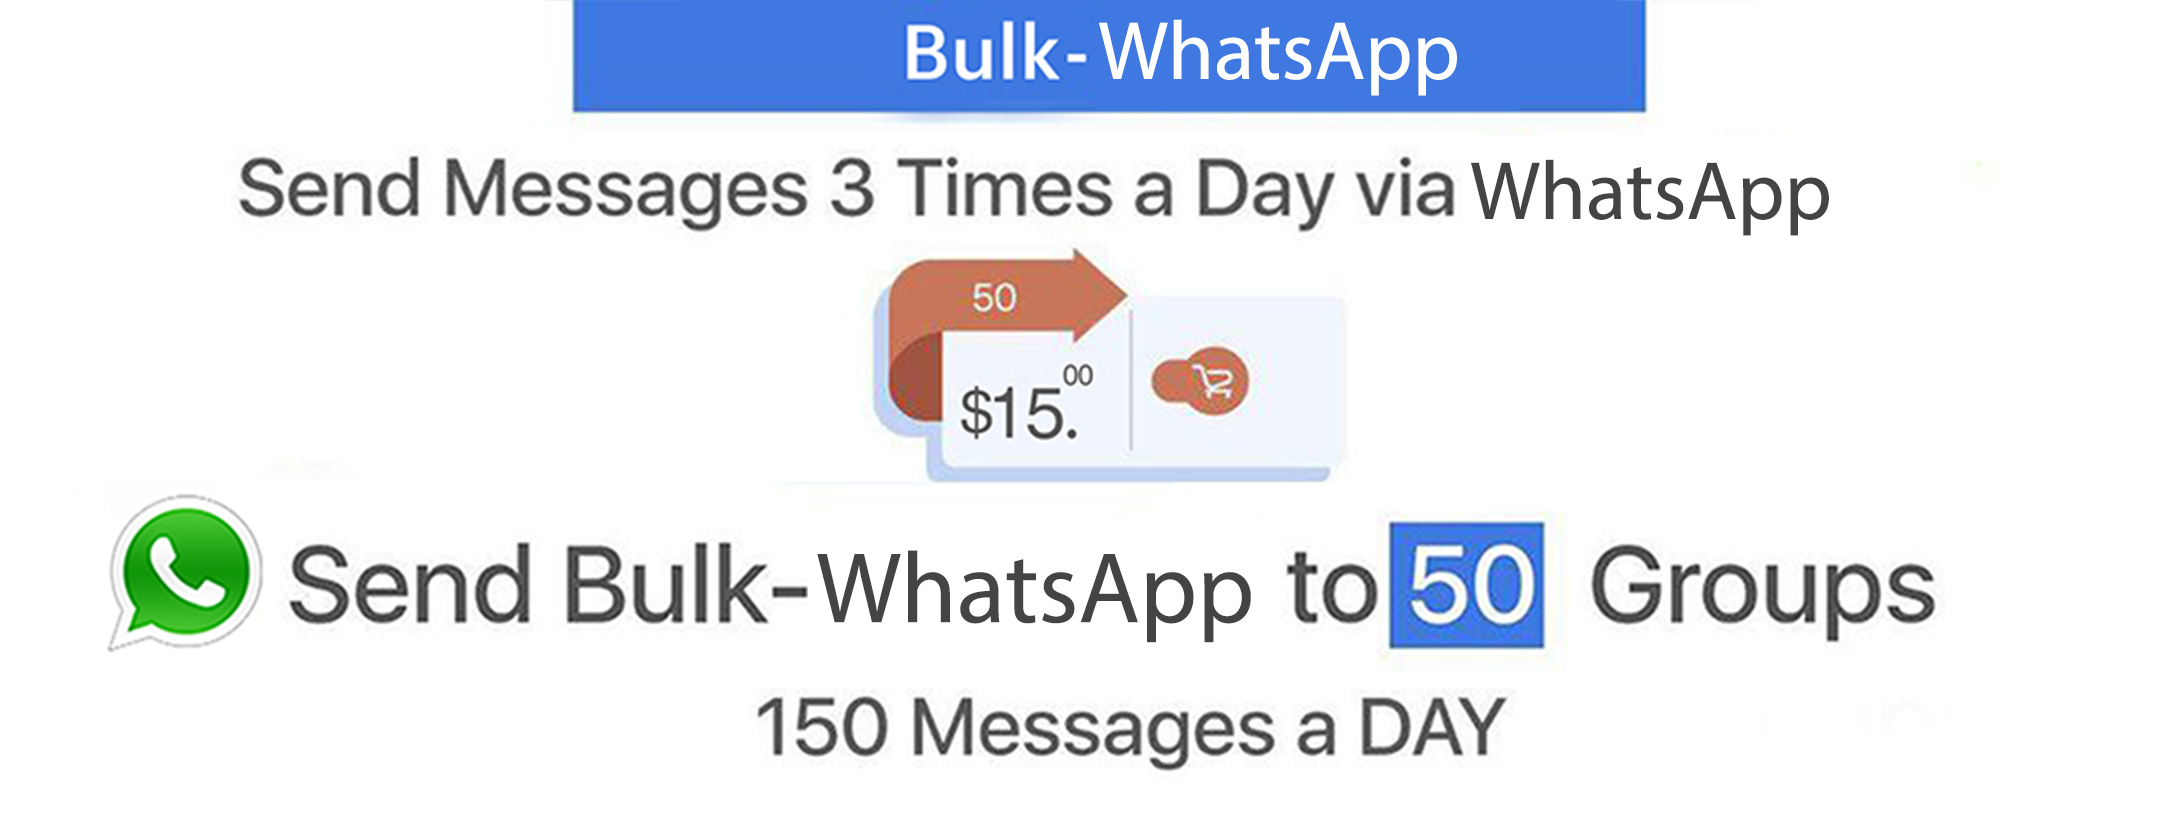 Send Messages via Whatsapp Groups